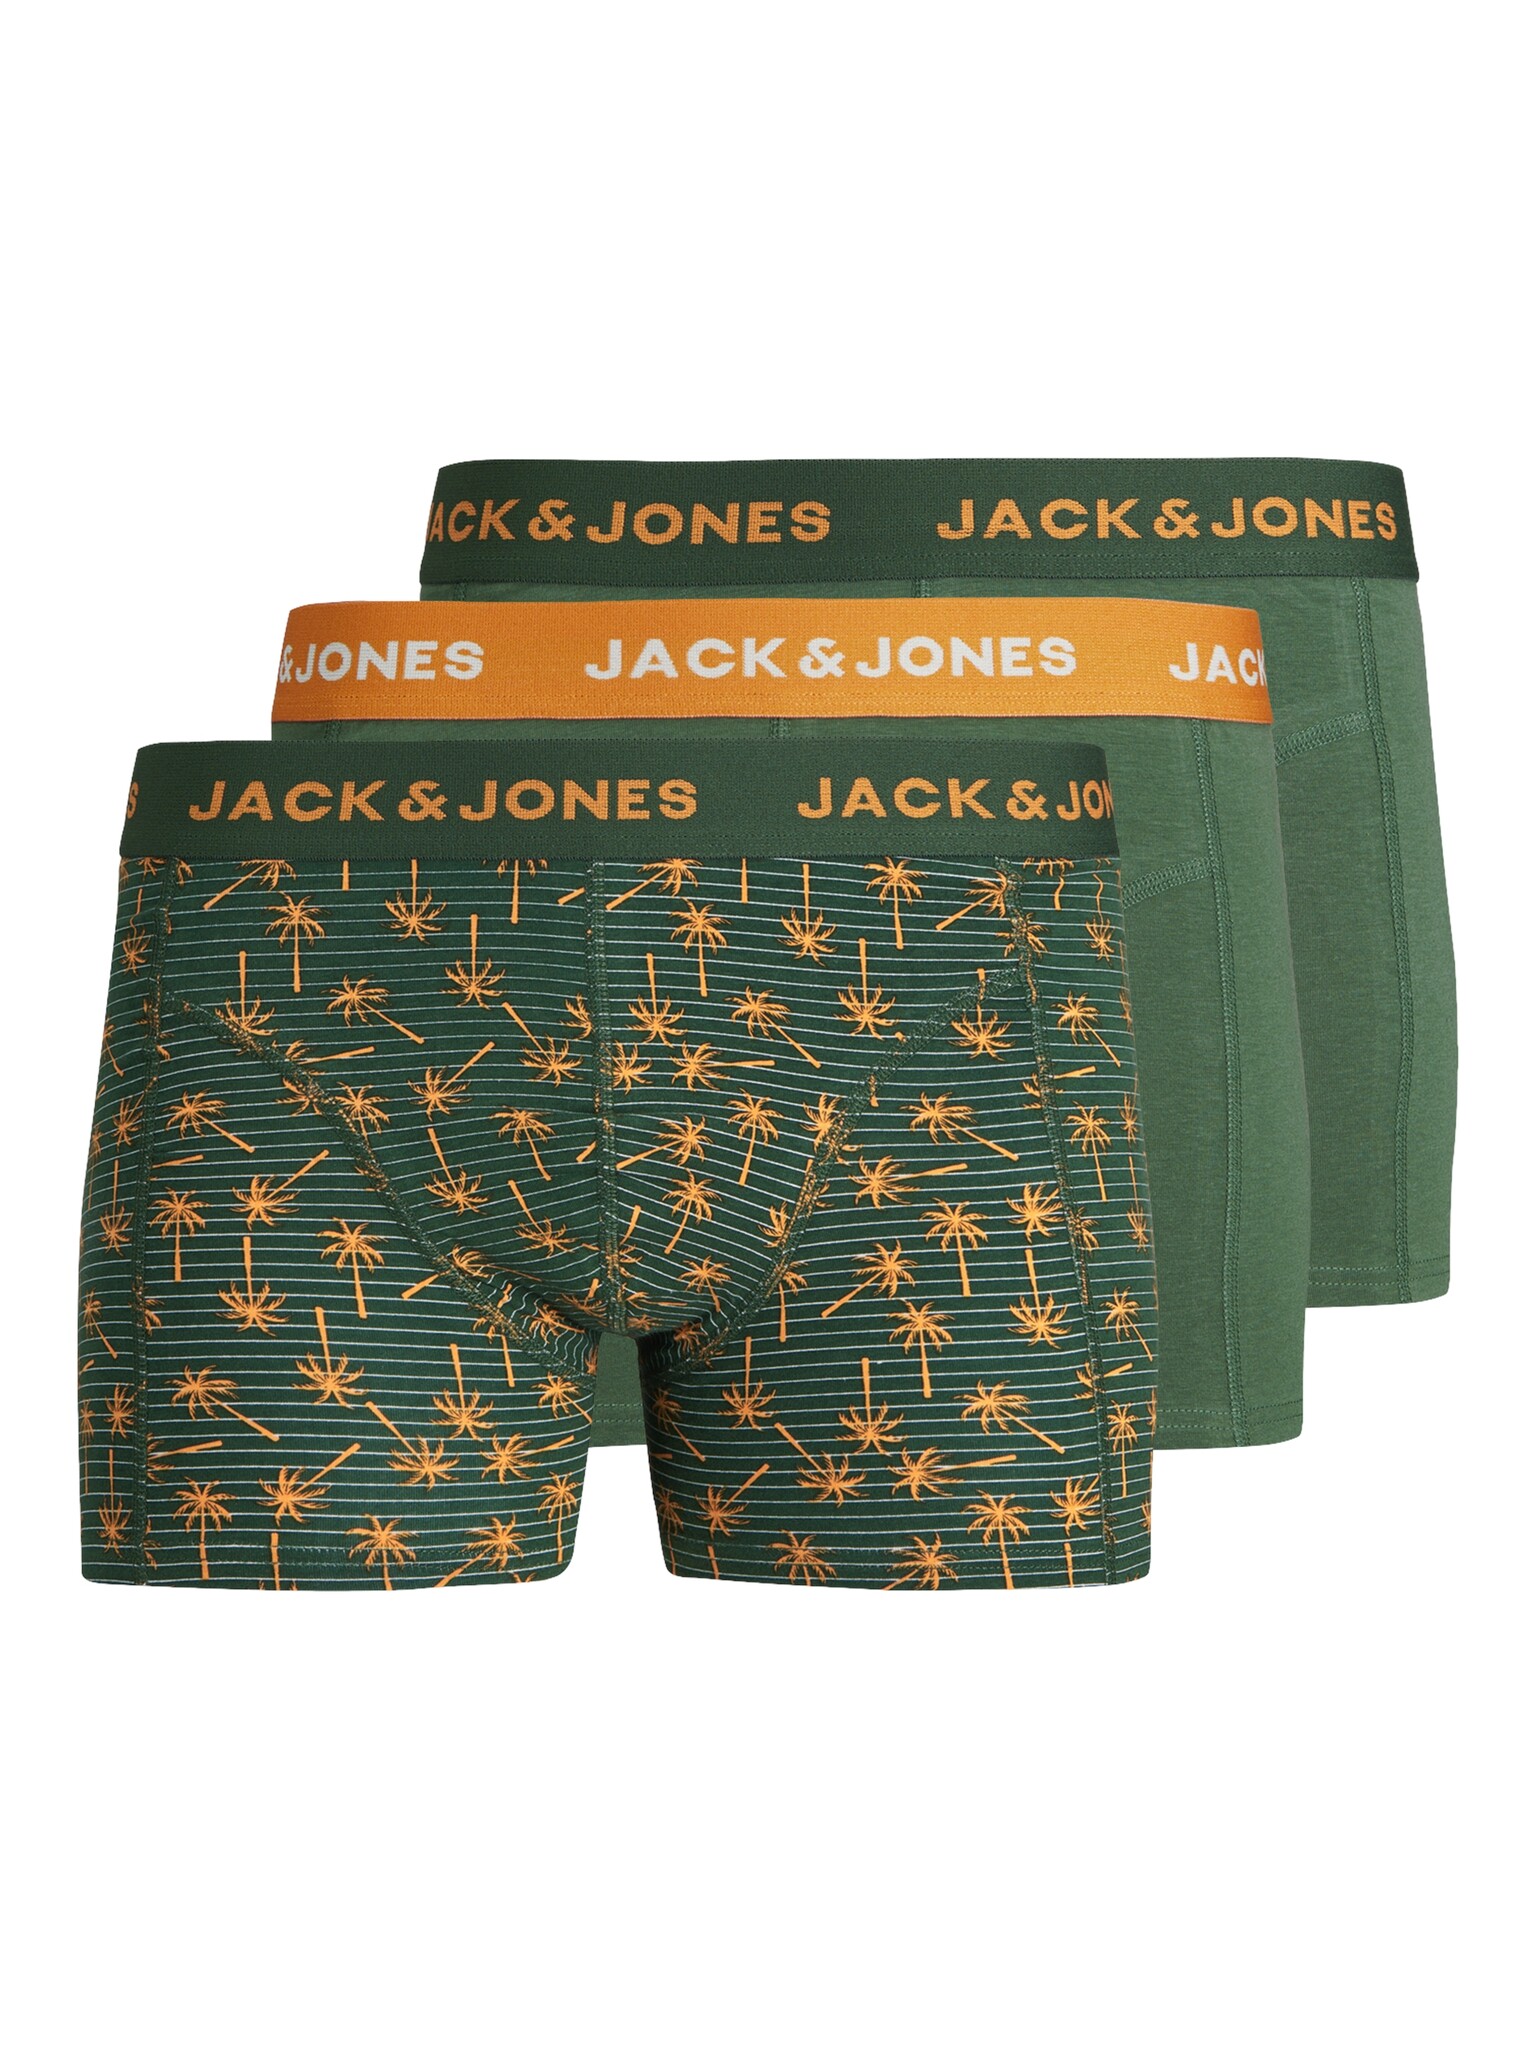 Jack Jones Jack Jones Heren Boxershorts Trunks JACULA Groen Oranje 3 Pack